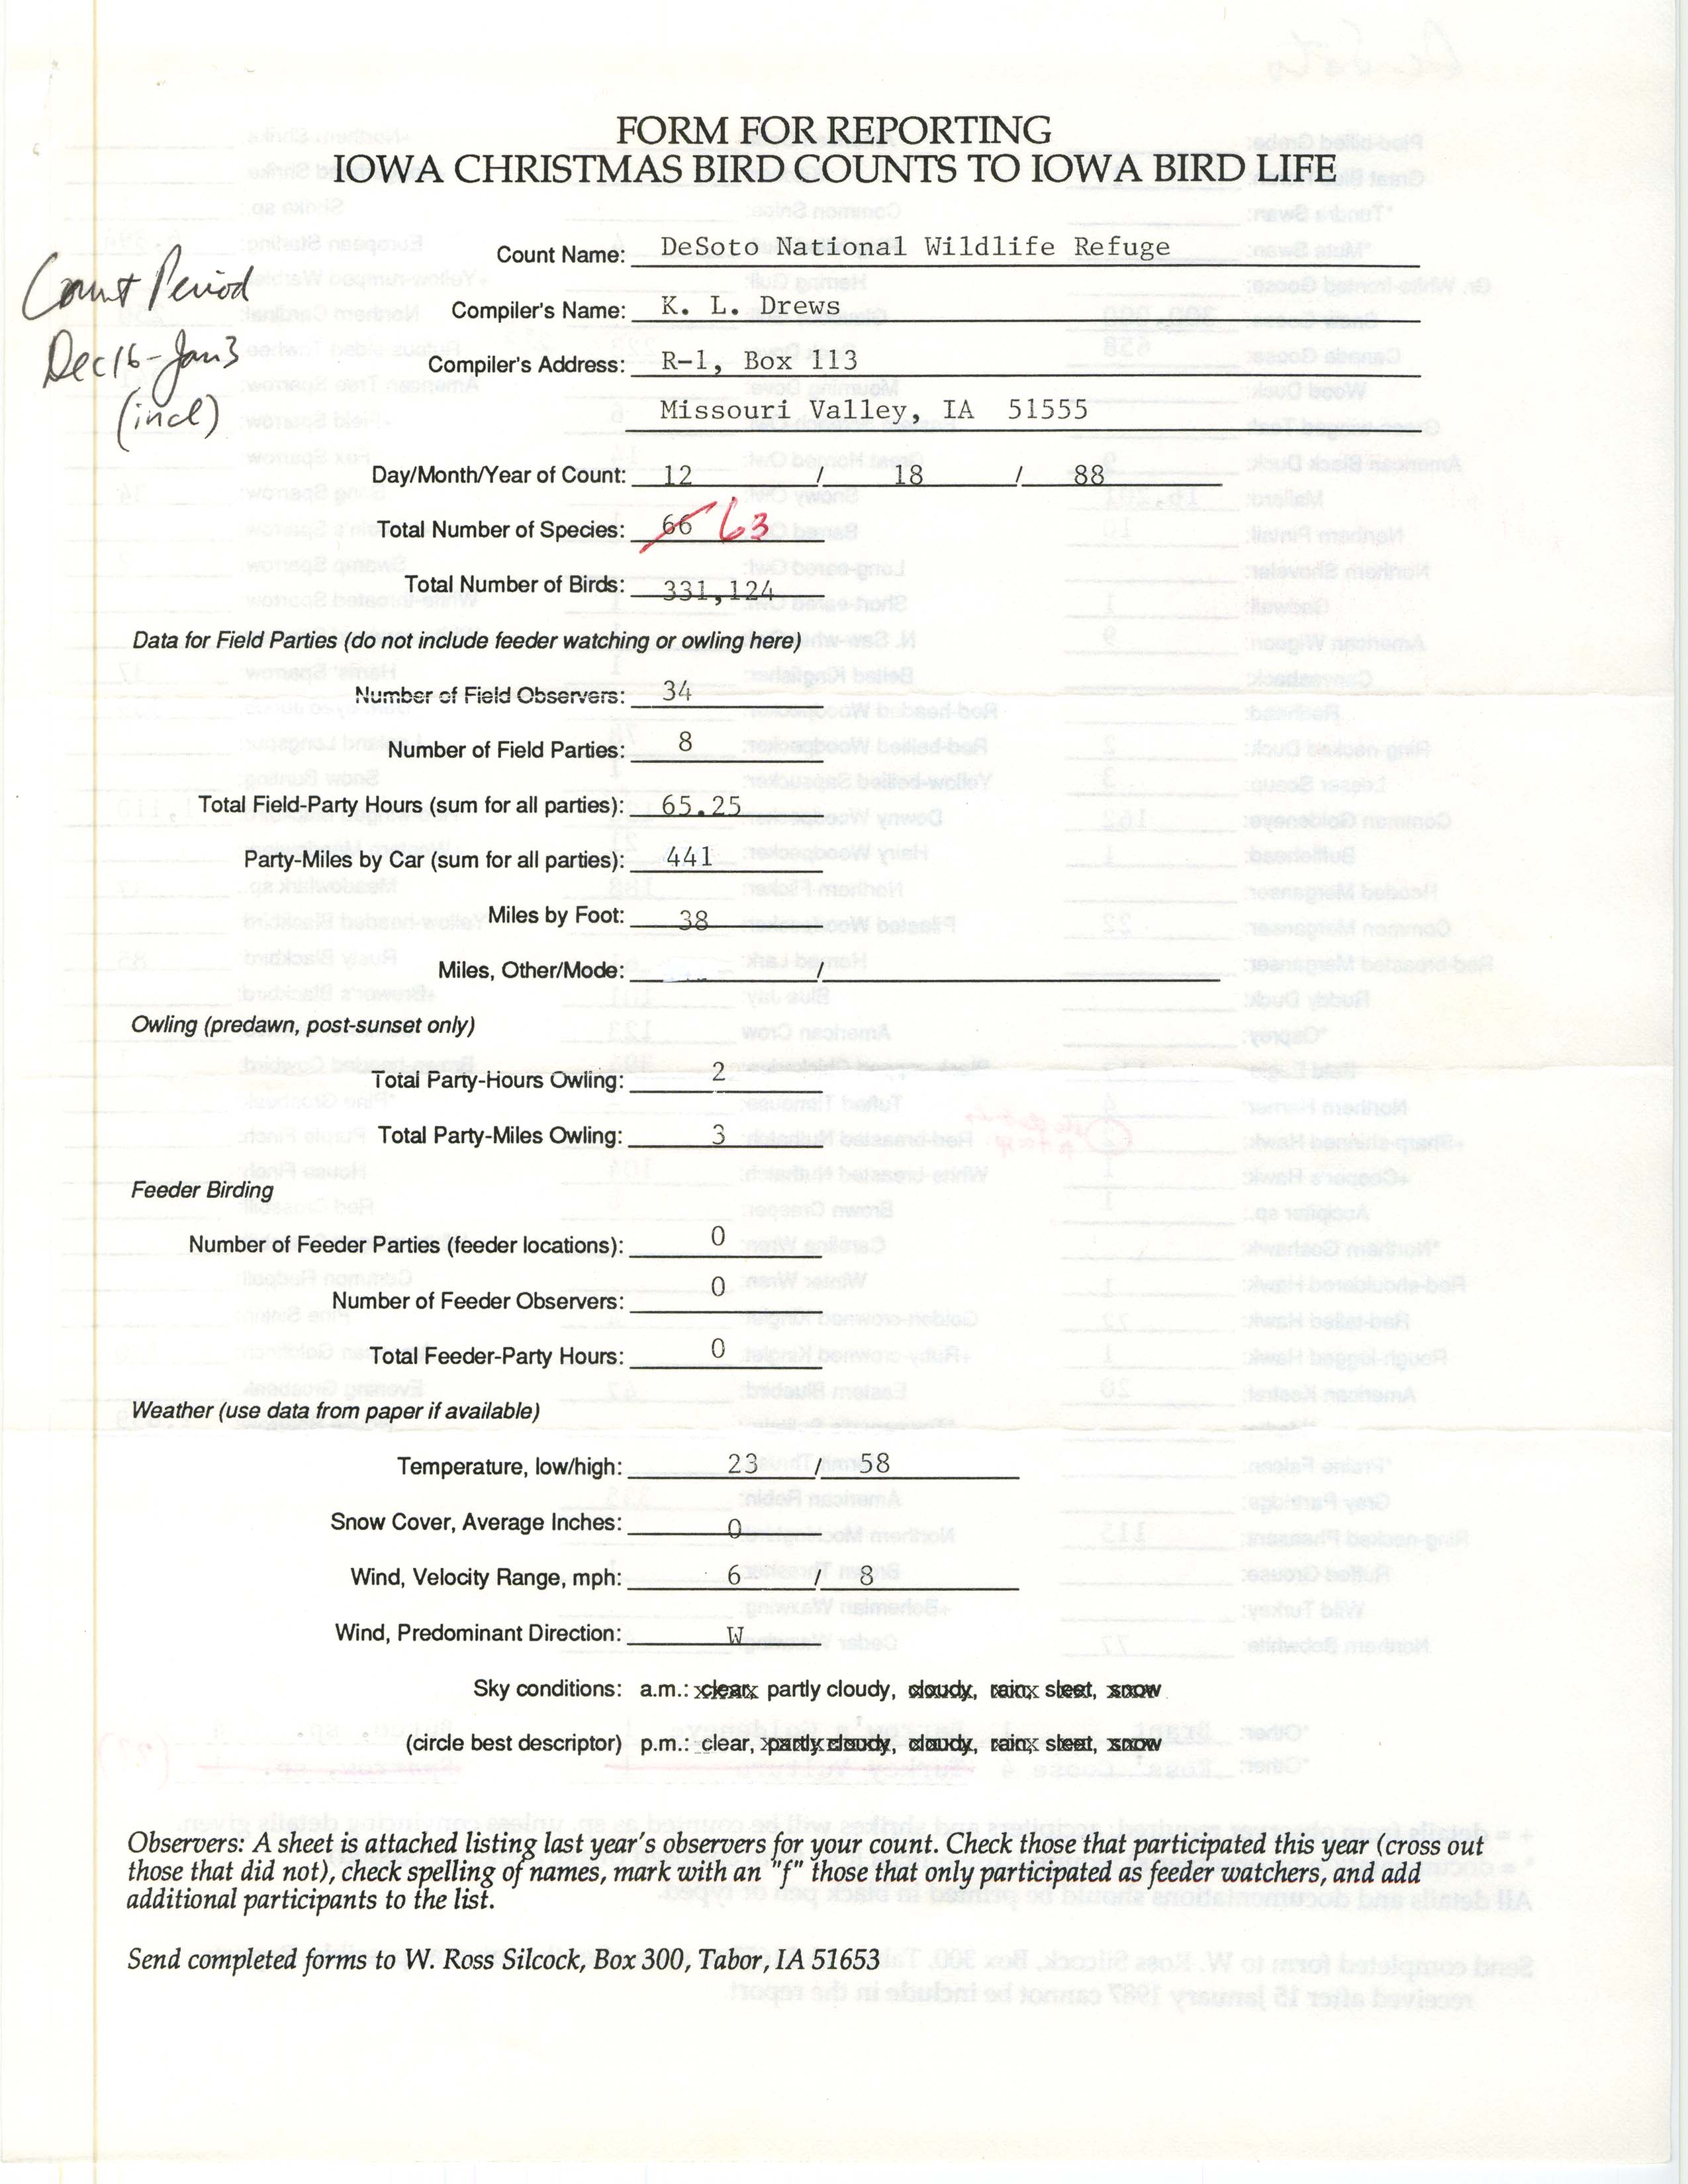 Form for reporting Iowa Christmas bird counts to Iowa Bird Life, K. L. Drews, December 18, 1988